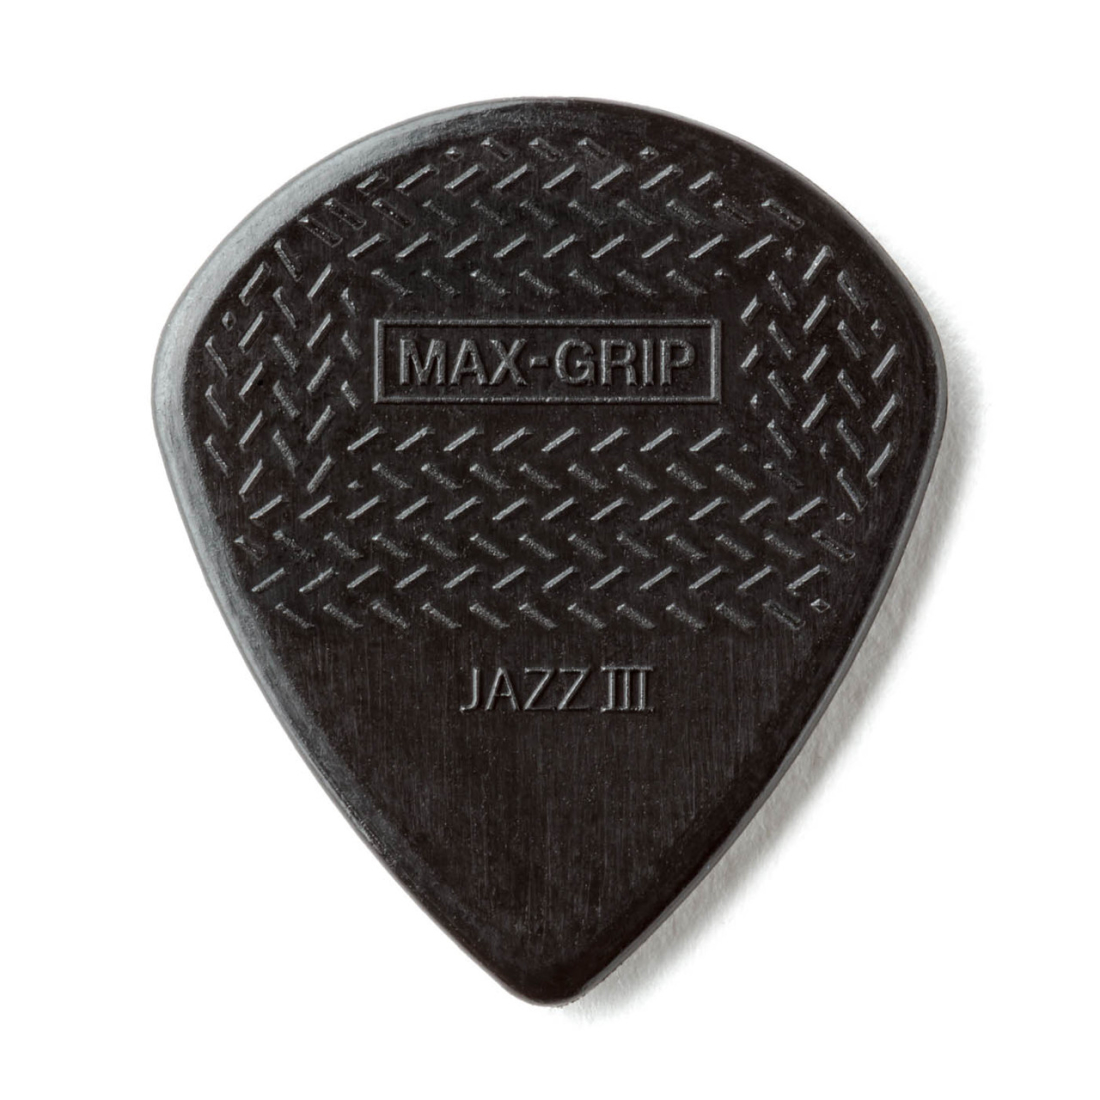 Max Grip Jazz III Player Pack (24 Pack) - Black Stiffo